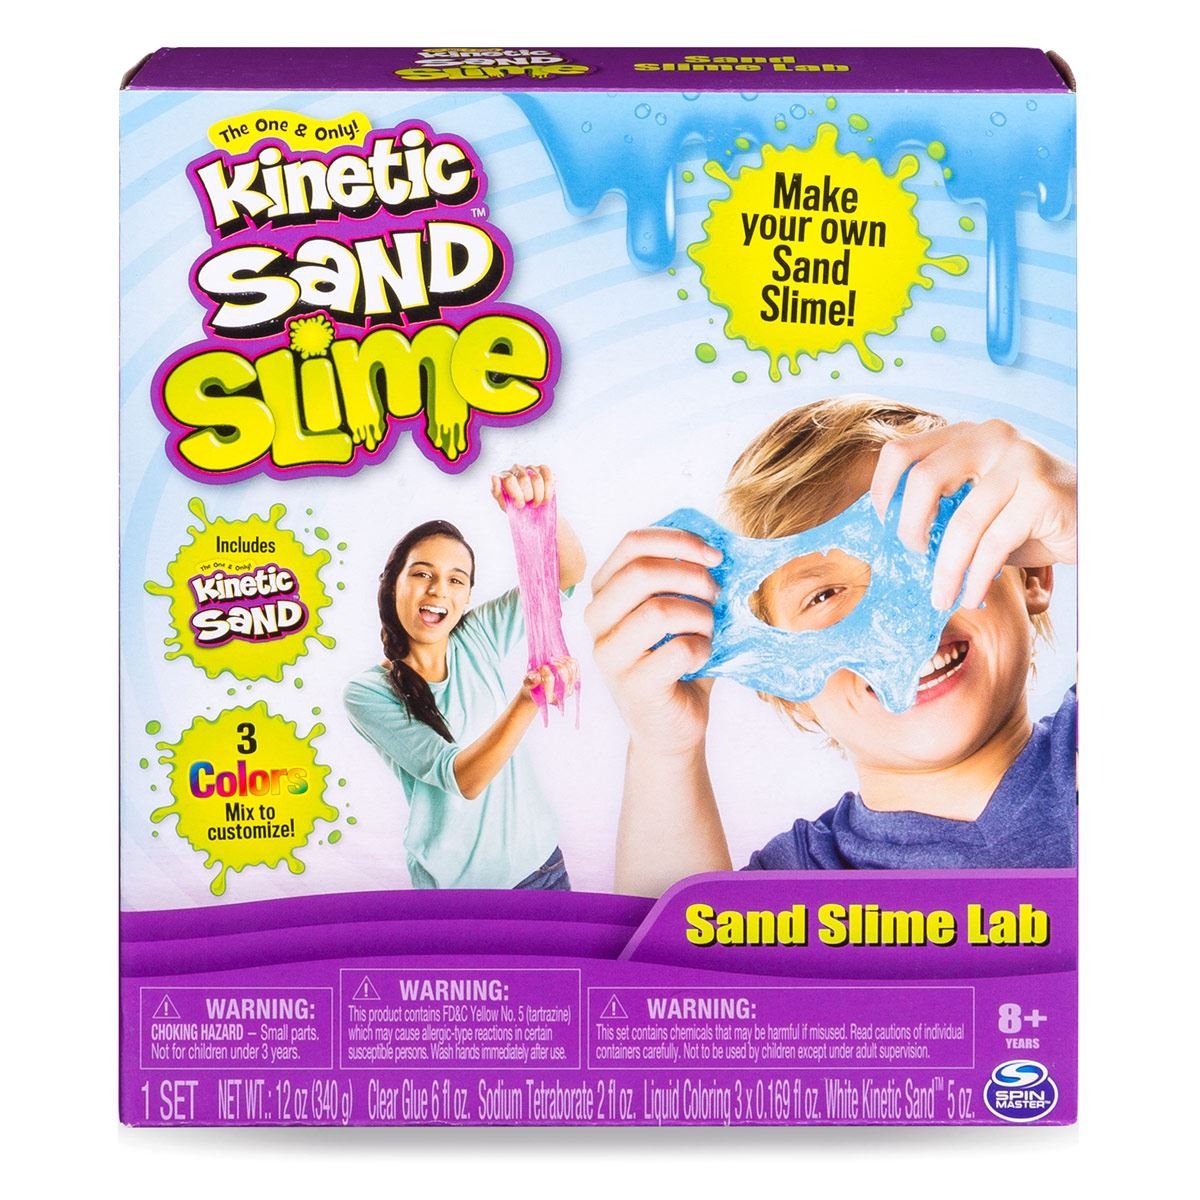 Laboratorio de Slime Kinetic Sand